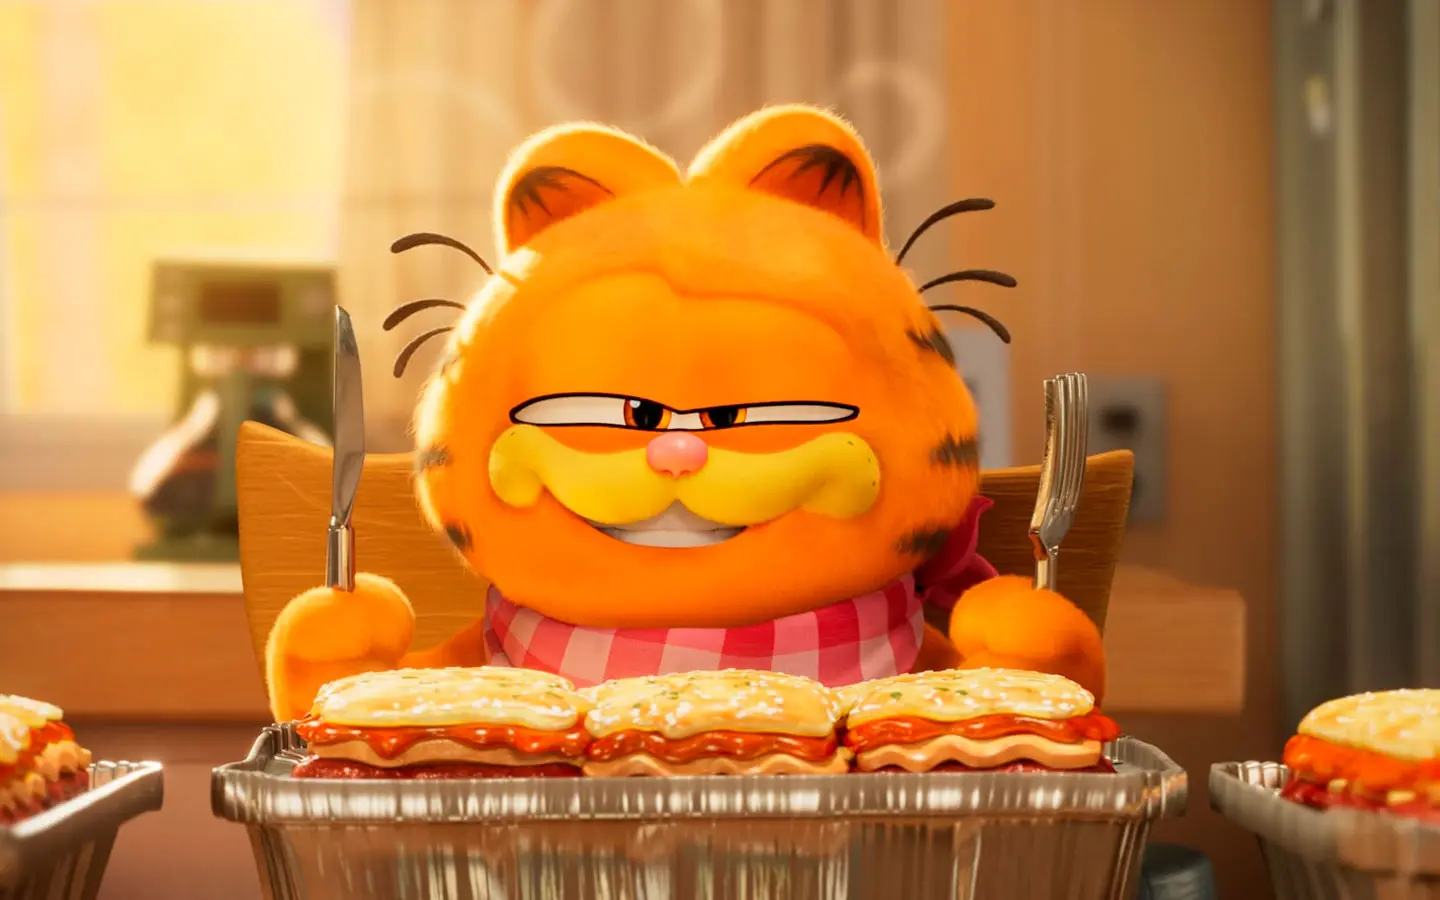 Review de “Garfield: Fuera de Casa”